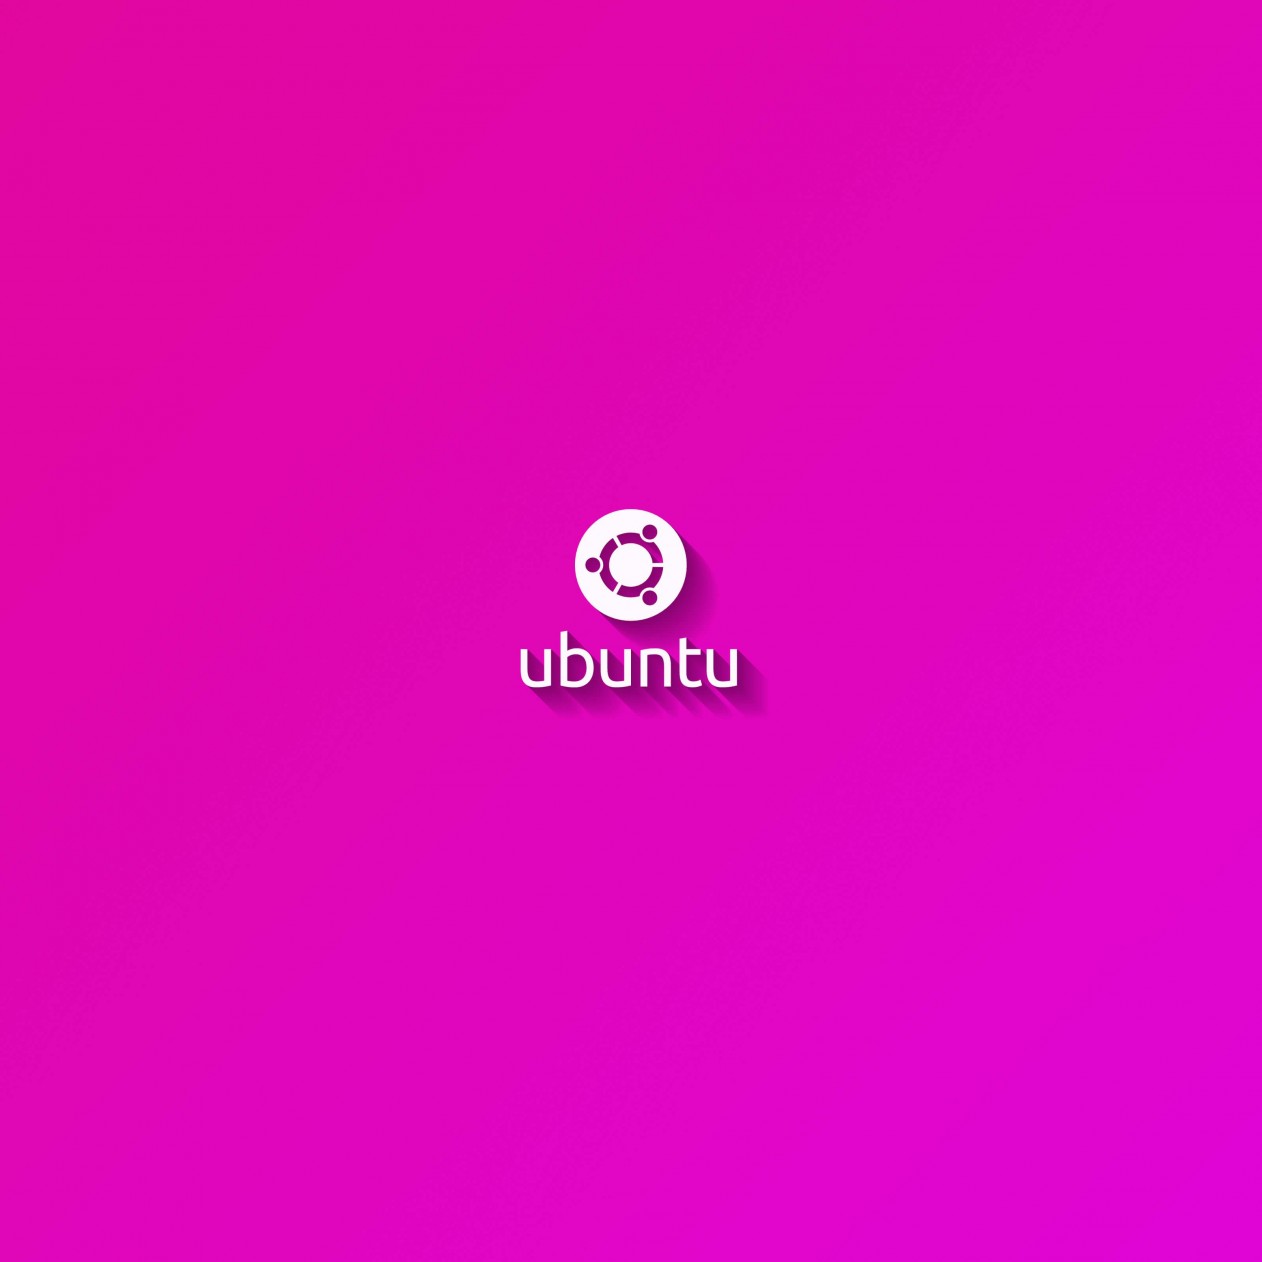 Ubuntu Flat Shadow Pink Wallpaper for Apple iPad mini